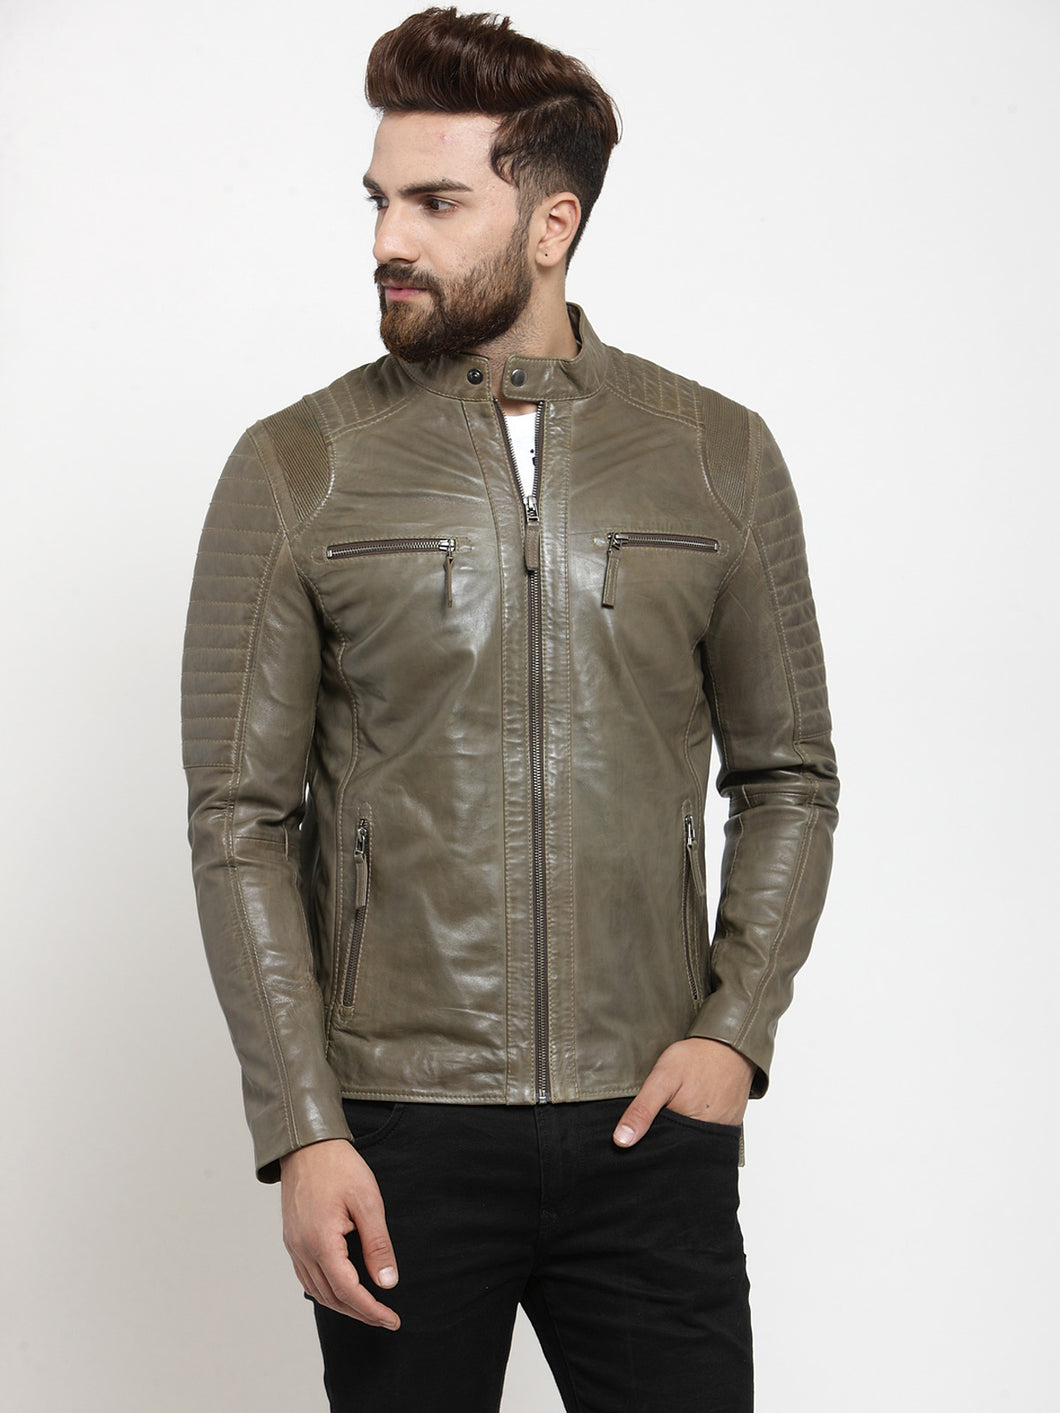 Custom Jackets - Men's Jackets - Online Leather Jackets, gloves, Shoes - USA  Online Shop